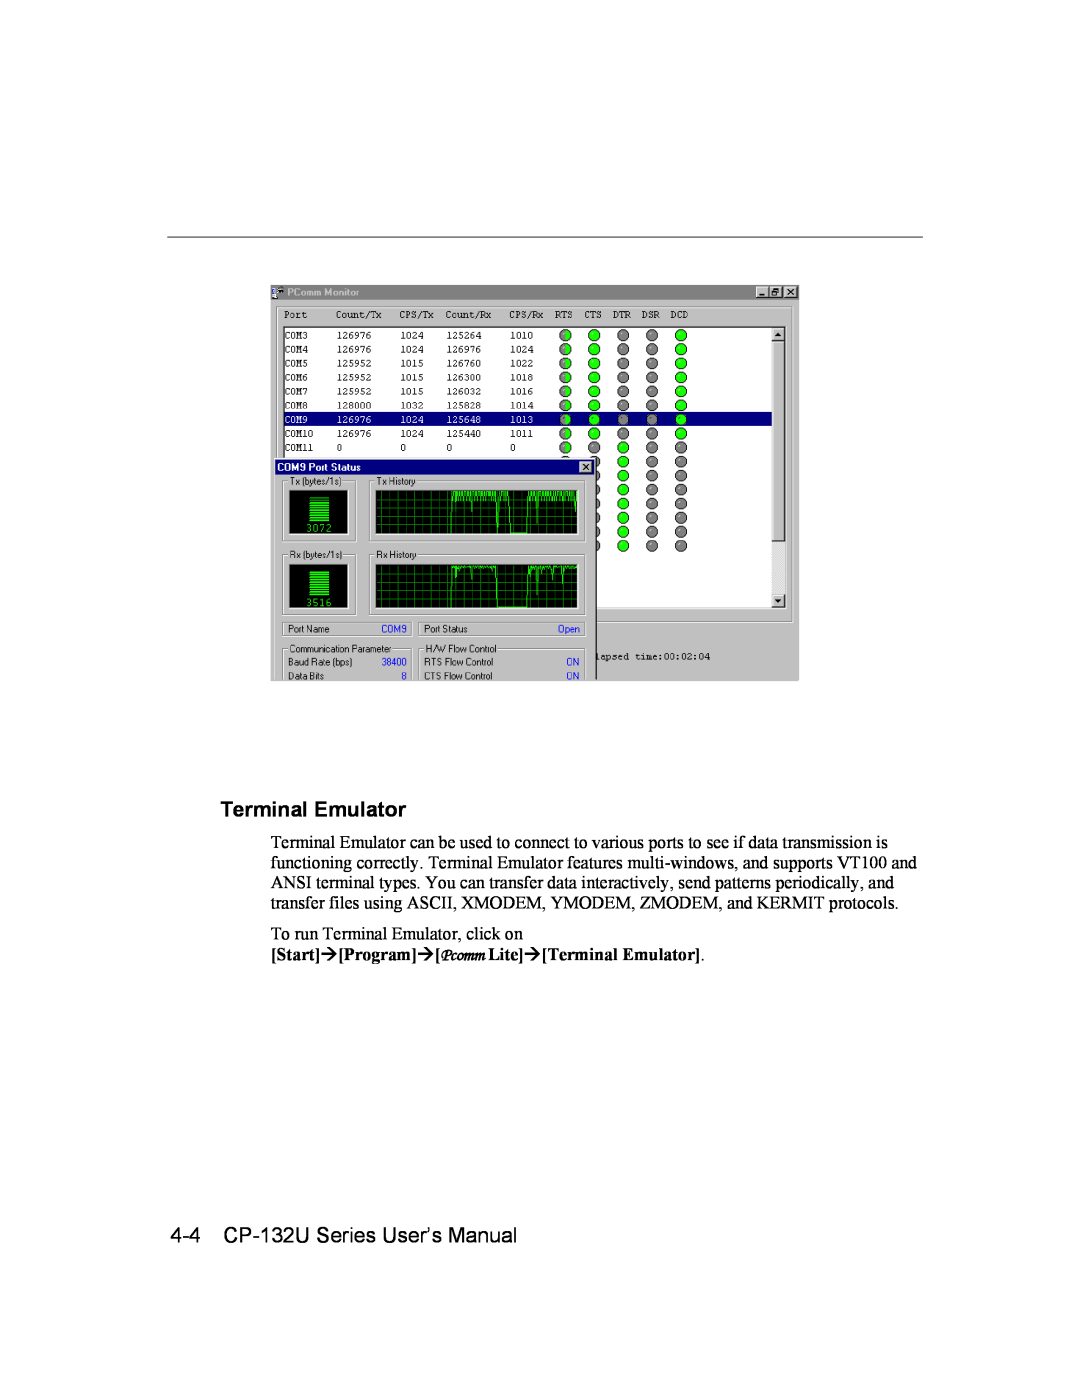 Moxa Technologies user manual 4-4 CP-132U Series User’s Manual, Start#Program#Pcomm Lite#Terminal Emulator 